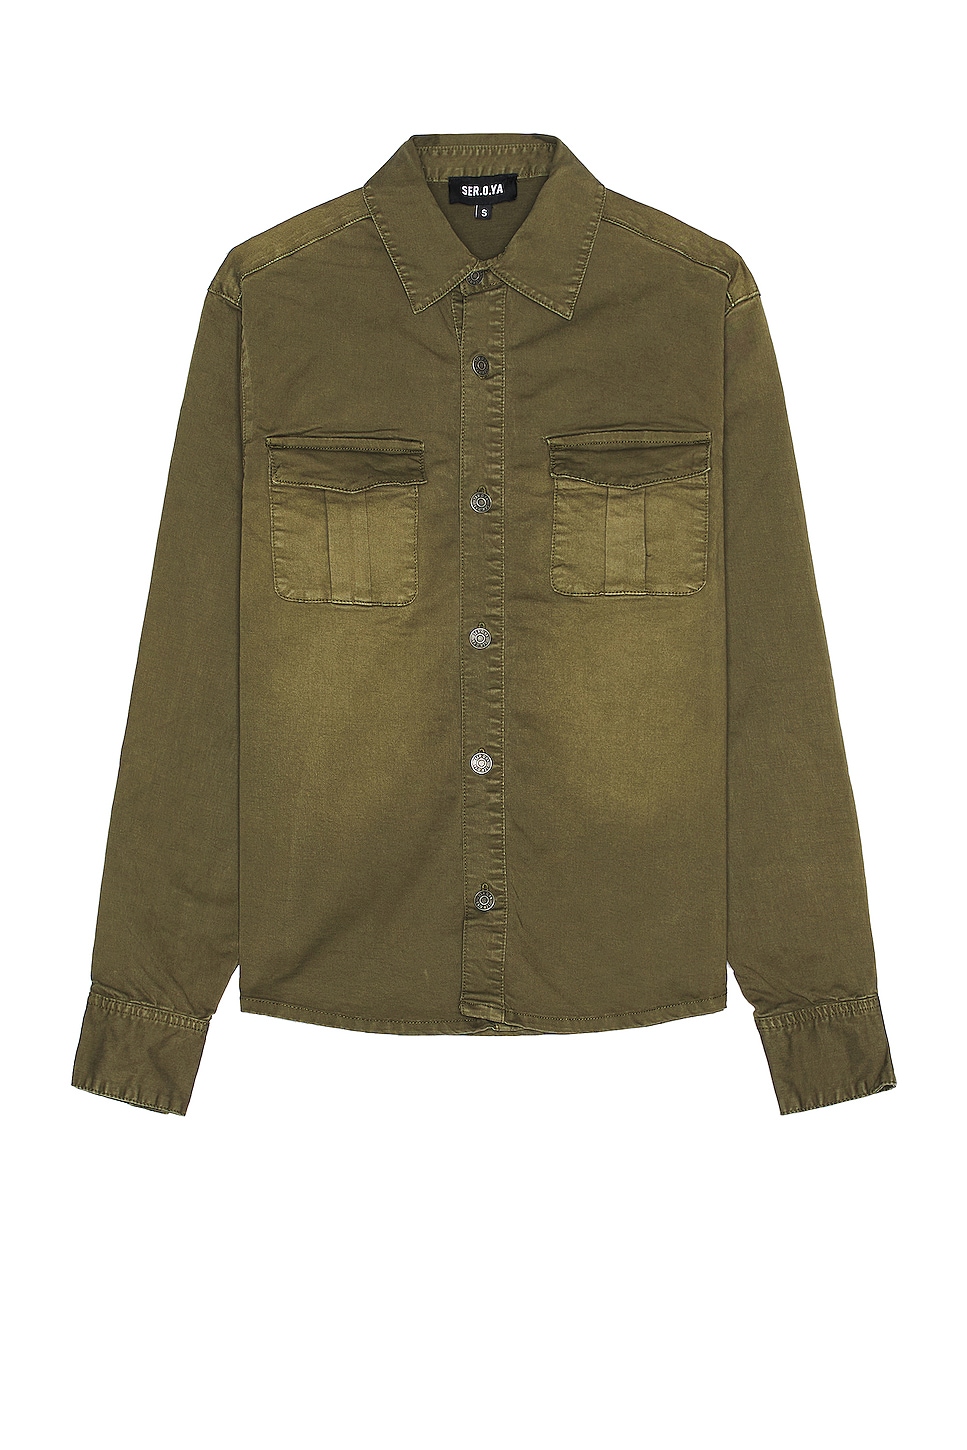 Image 1 of SER.O.YA Cameron Shirt in Vintage Army Green